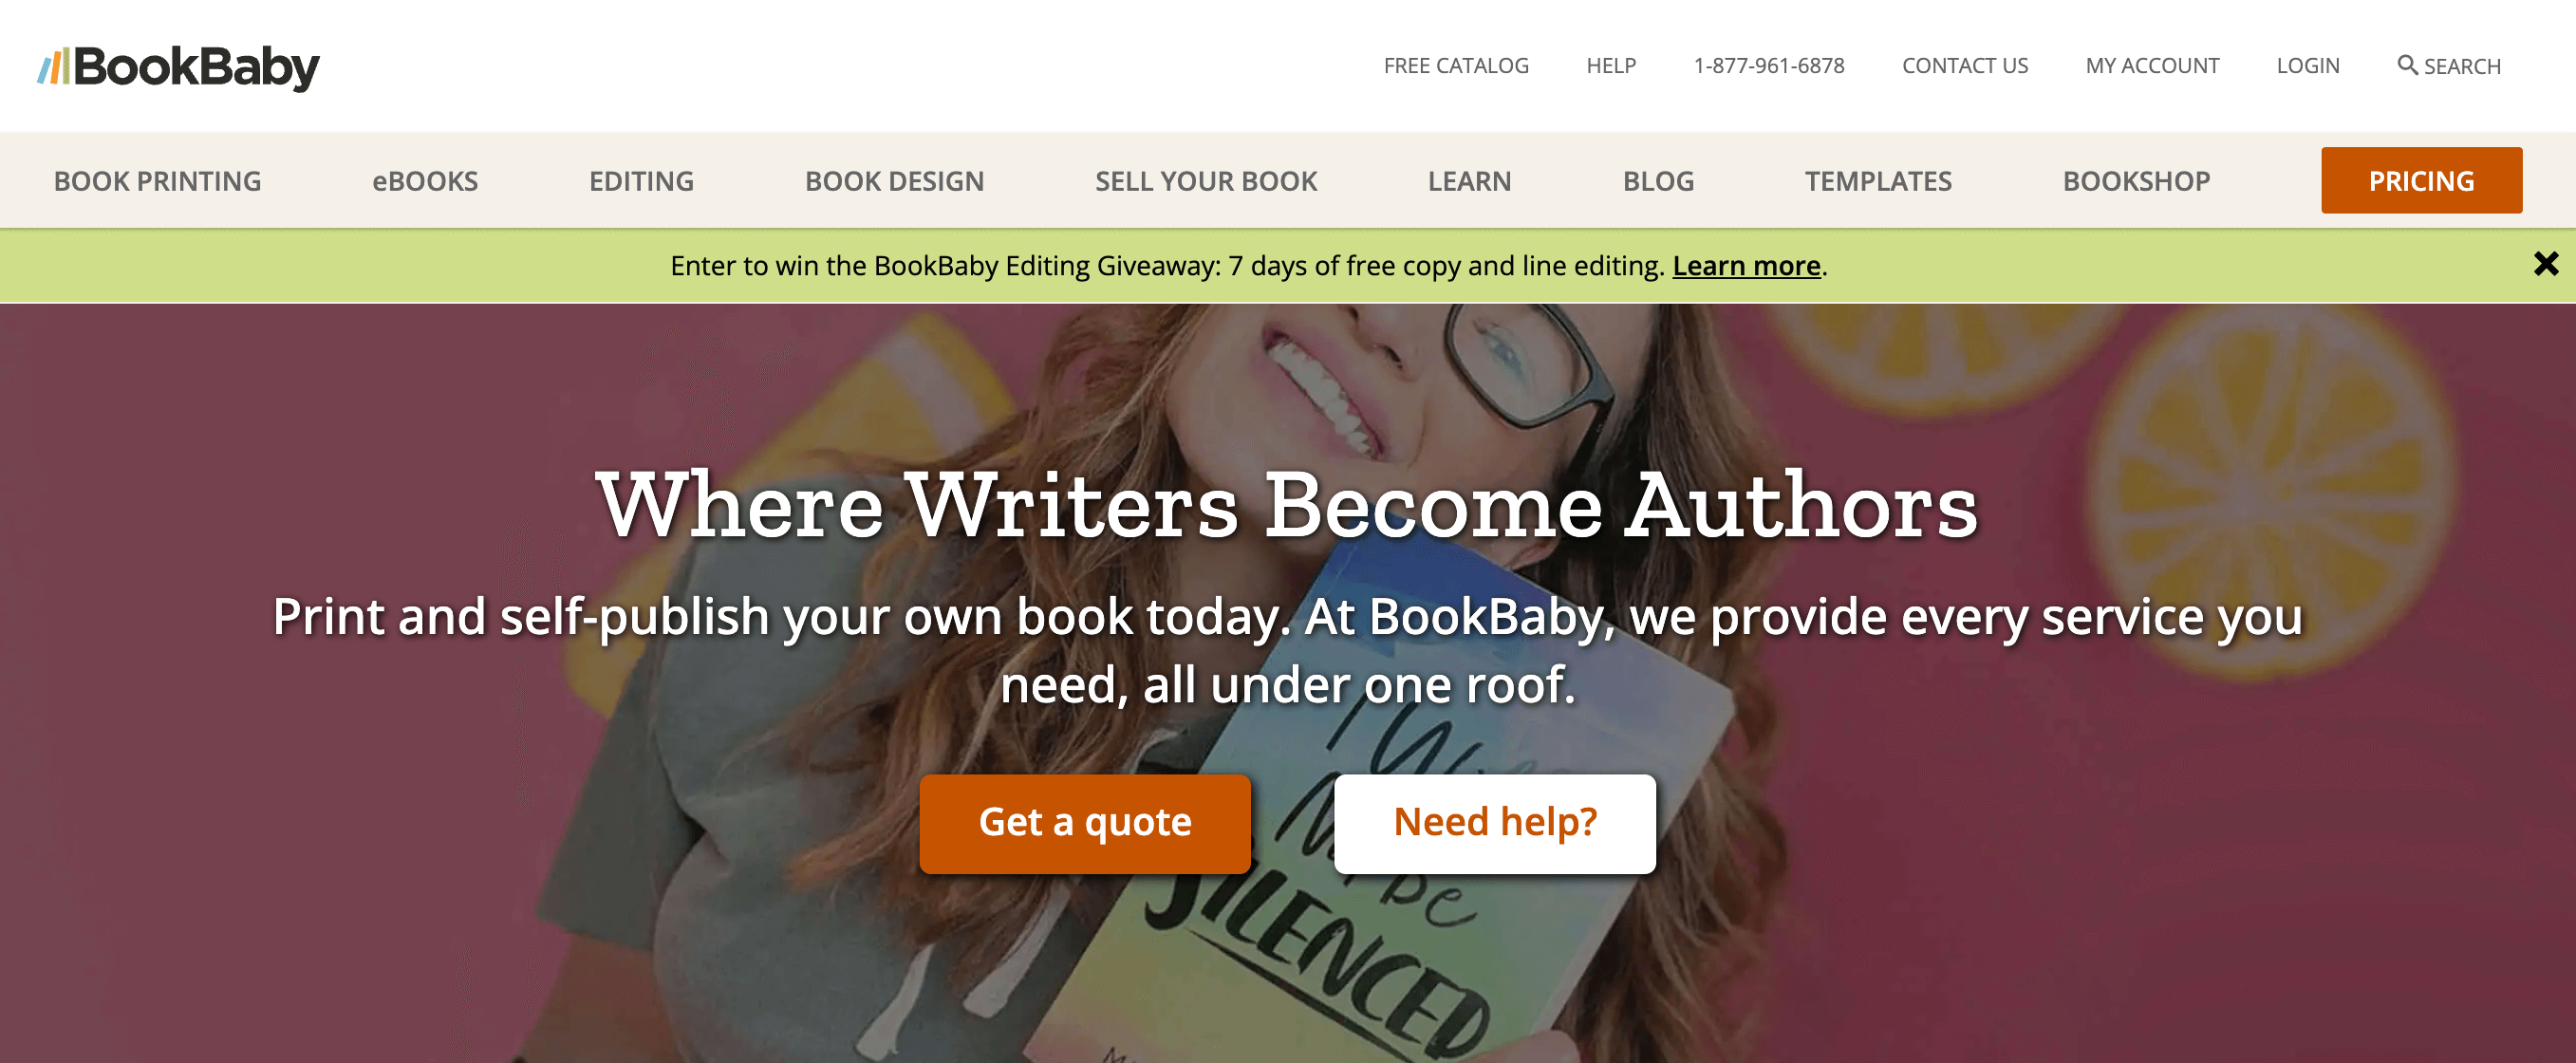 BookBabys homepage